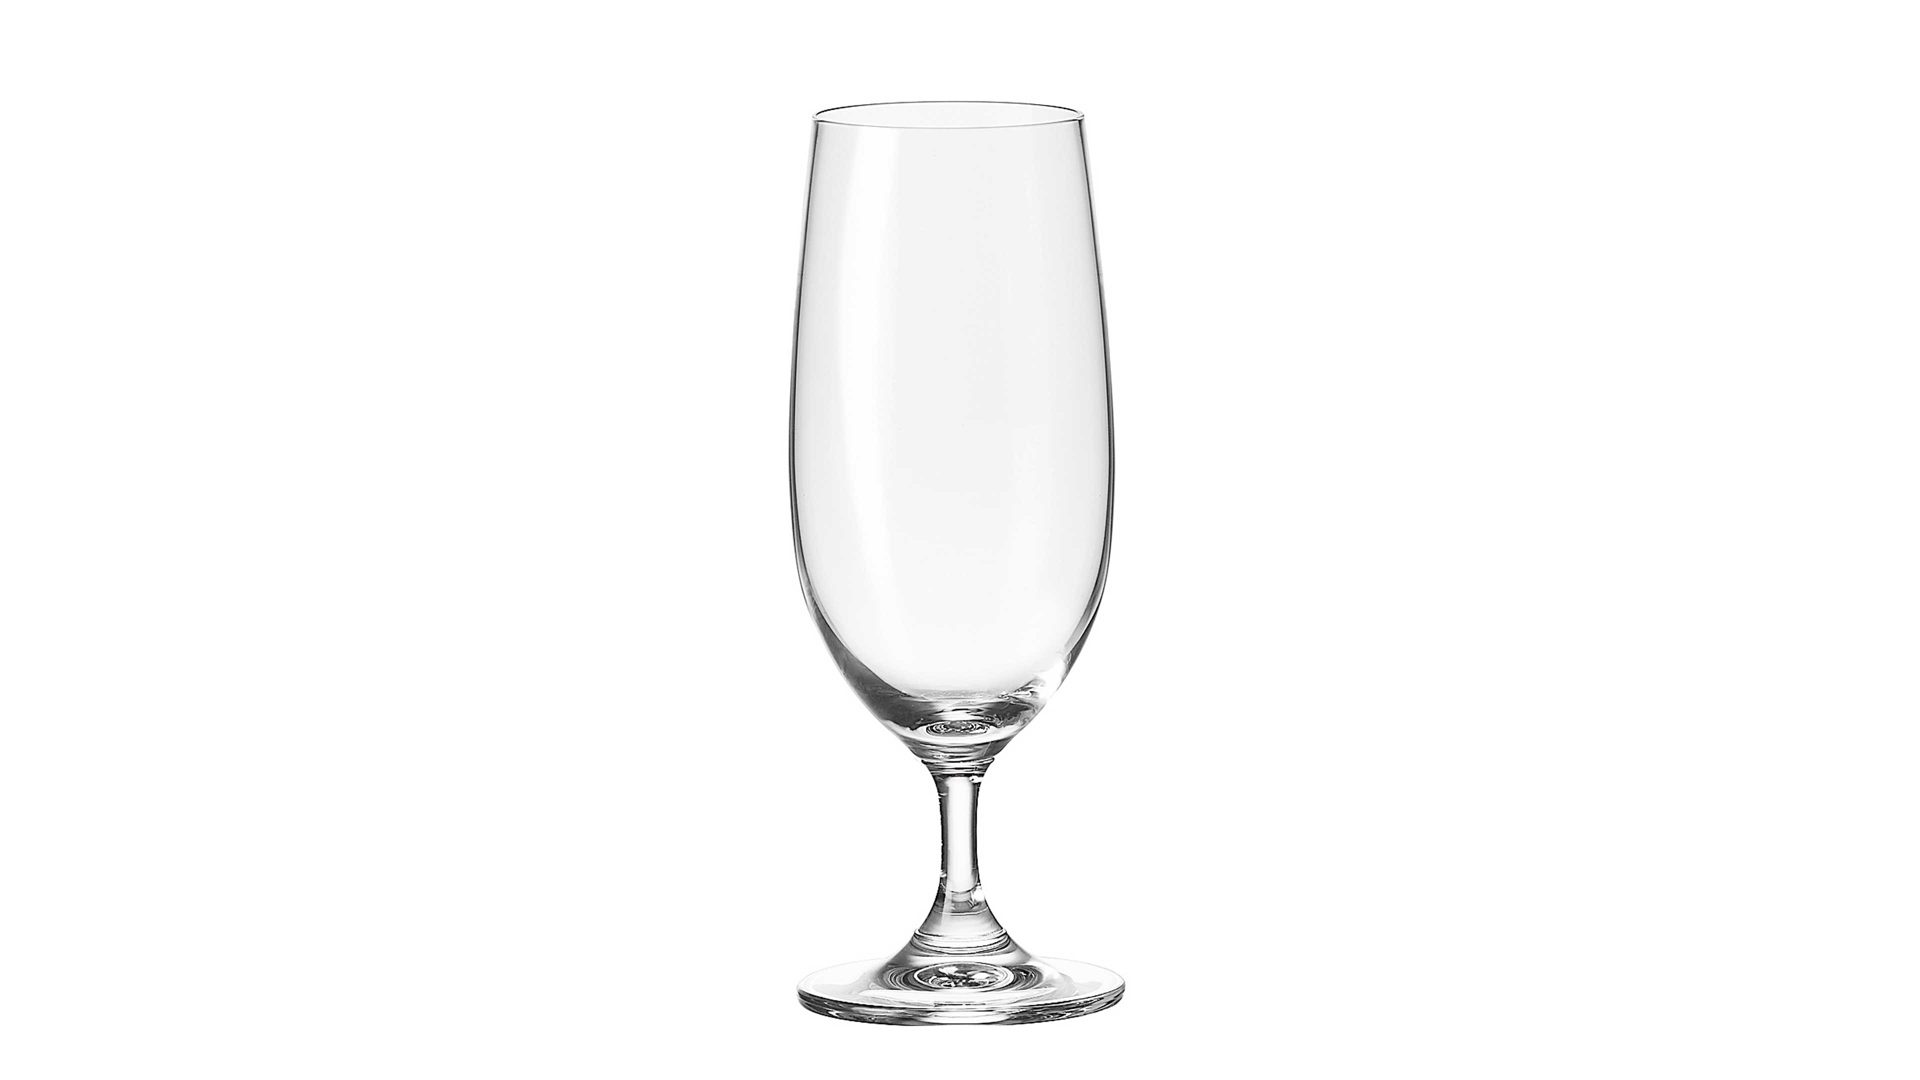 Bierglas Leonardo | glaskoch aus Glas in Transparent LEONARDO Bierglas Daily TEQTON®-Kristallglas – Fassungvermögen ca. 360 ml